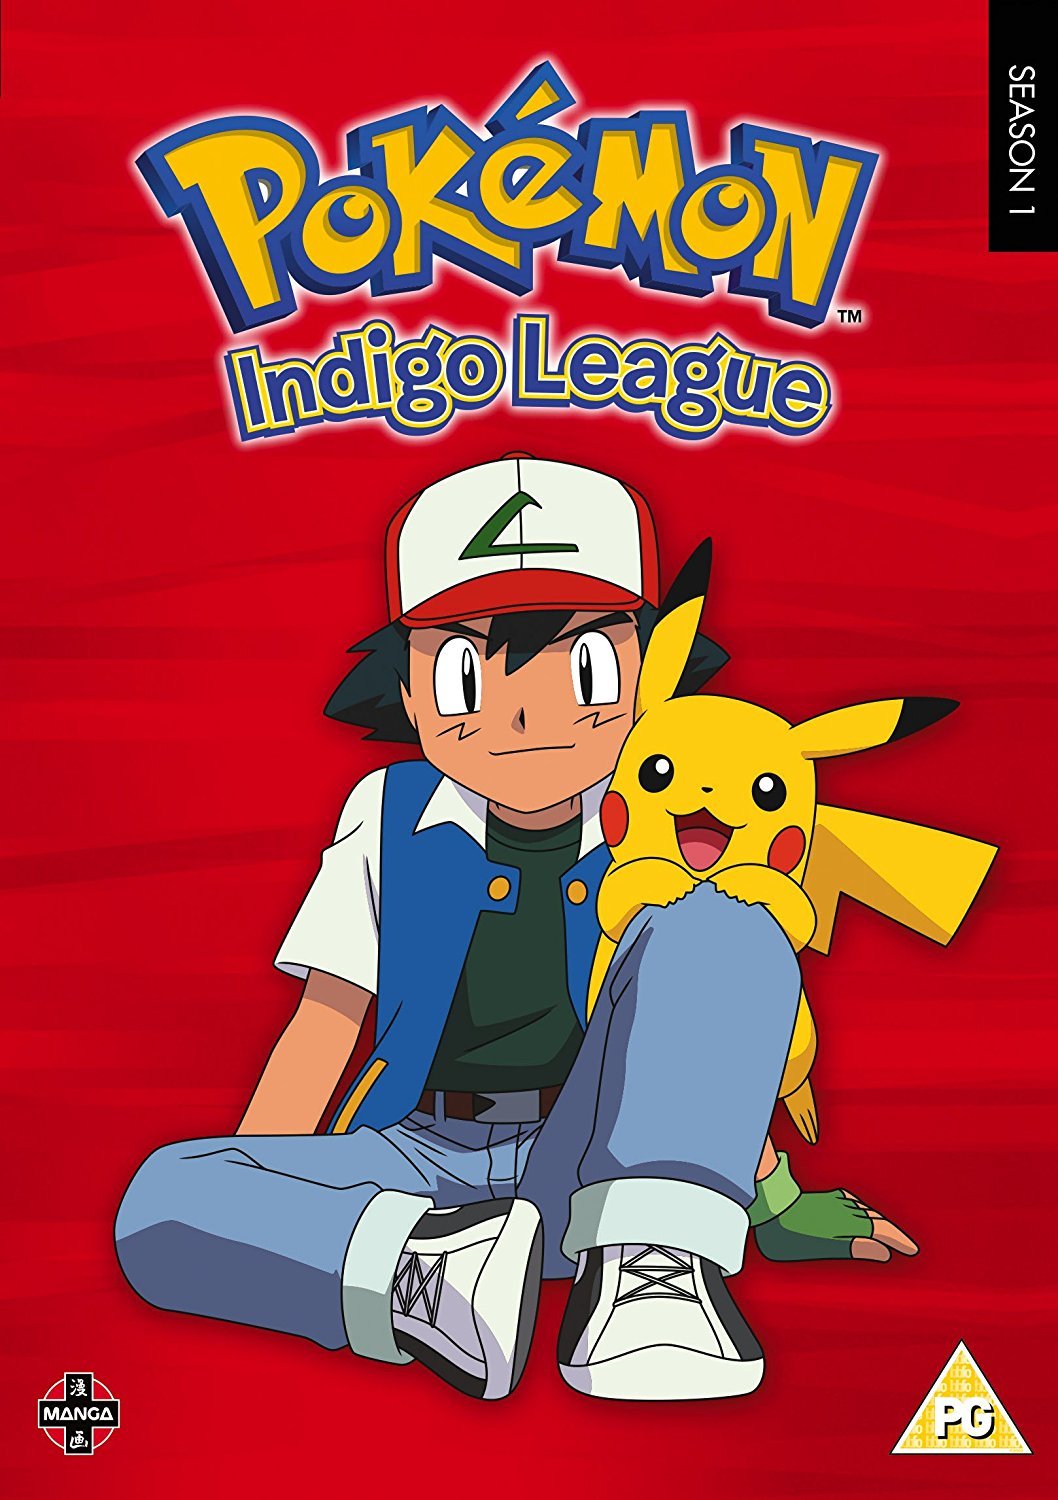 Stiahni si Seriál Pokemon 1.Serie Indigo League Part 2 (CZ/EN)[DVDRip][480p][AVC] = CSFD 44%